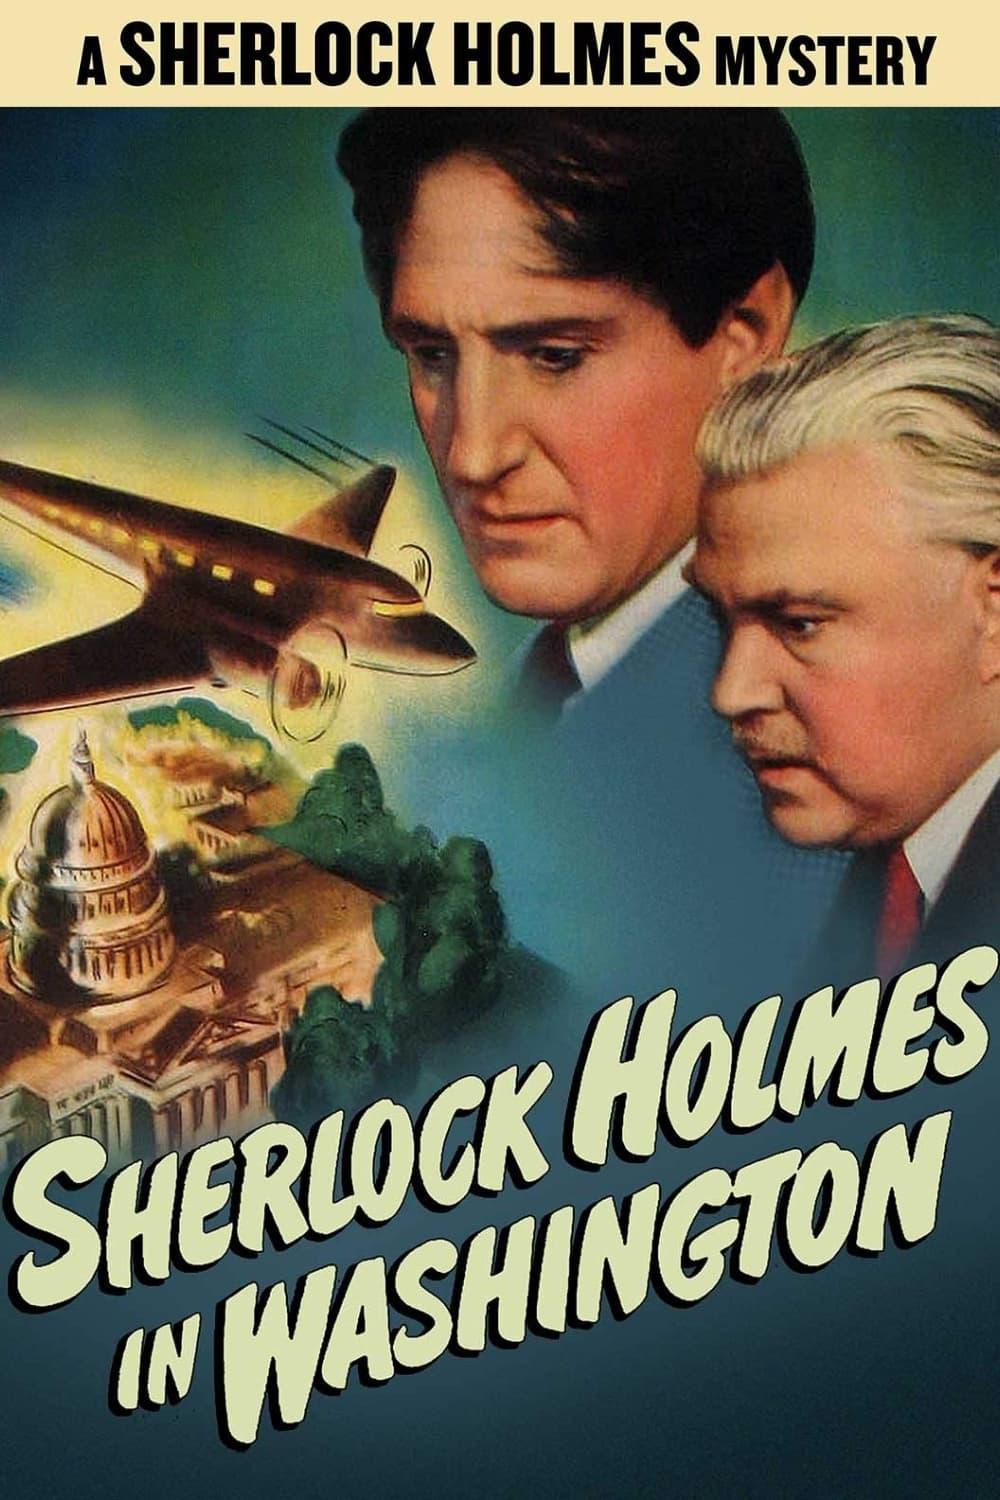 Sherlock Holmes in Washington poster